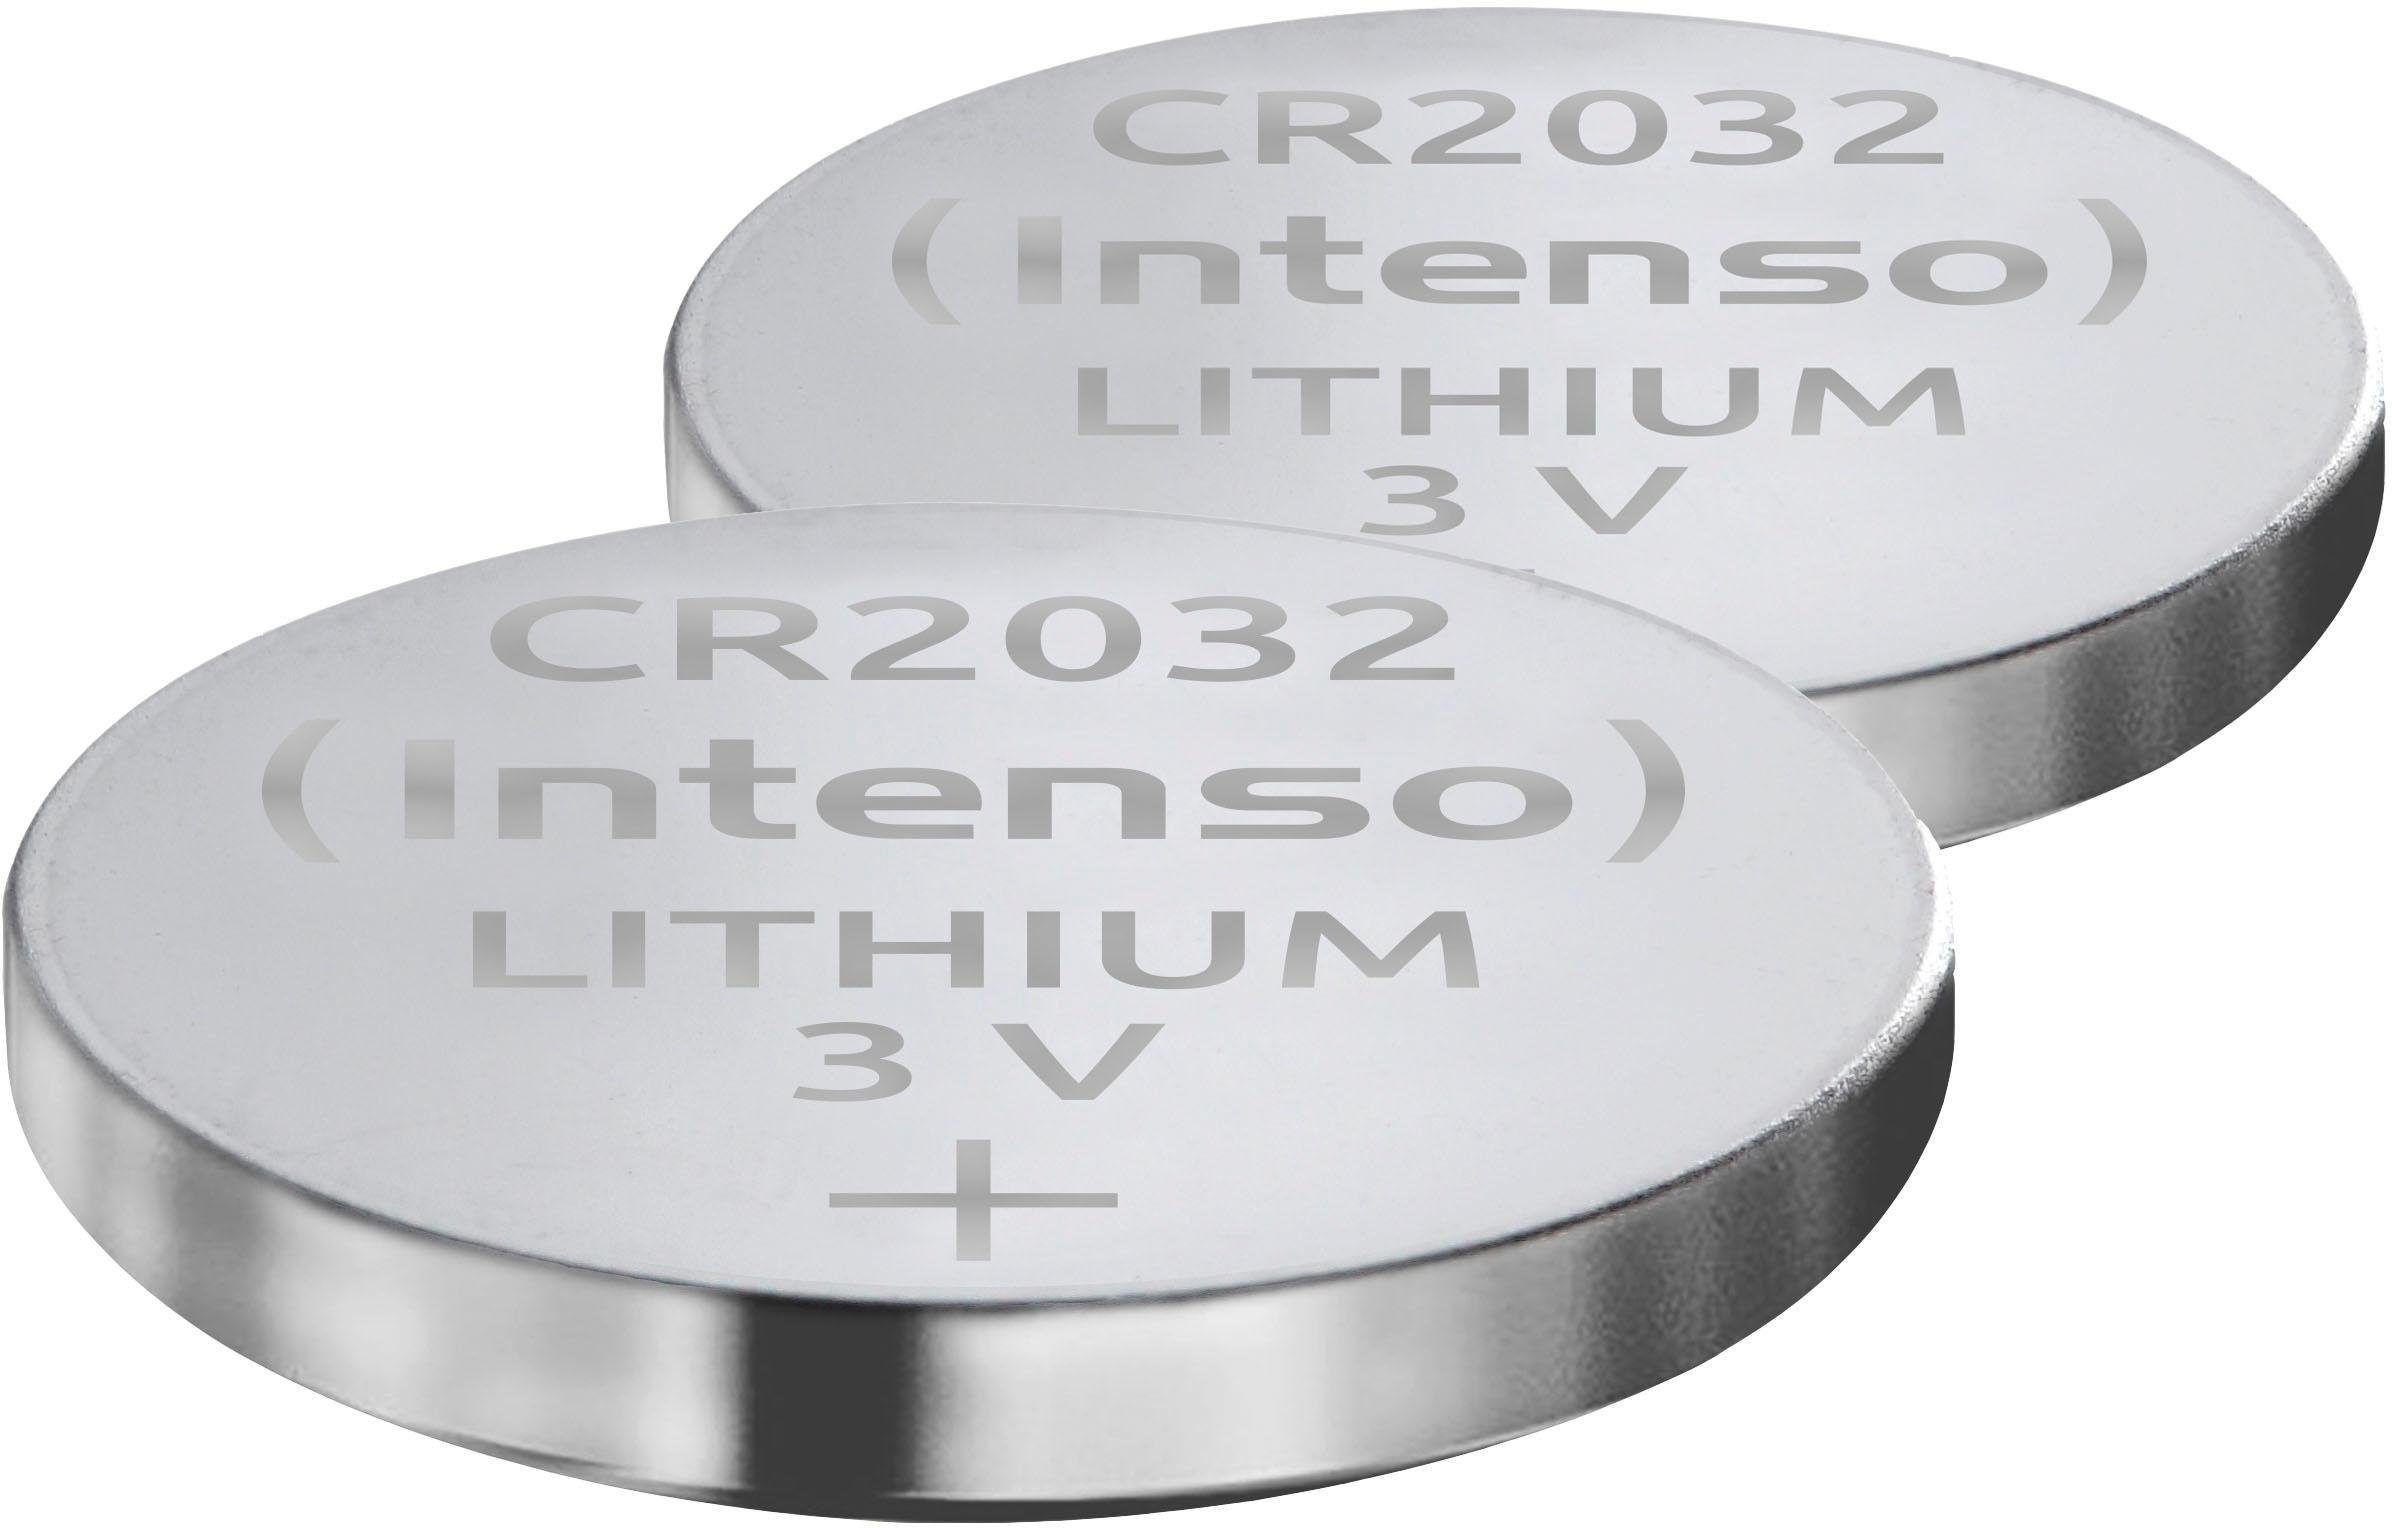 Intenso 2er 2032 (2 Ultra Energy St) Knopfzelle, Pack CR